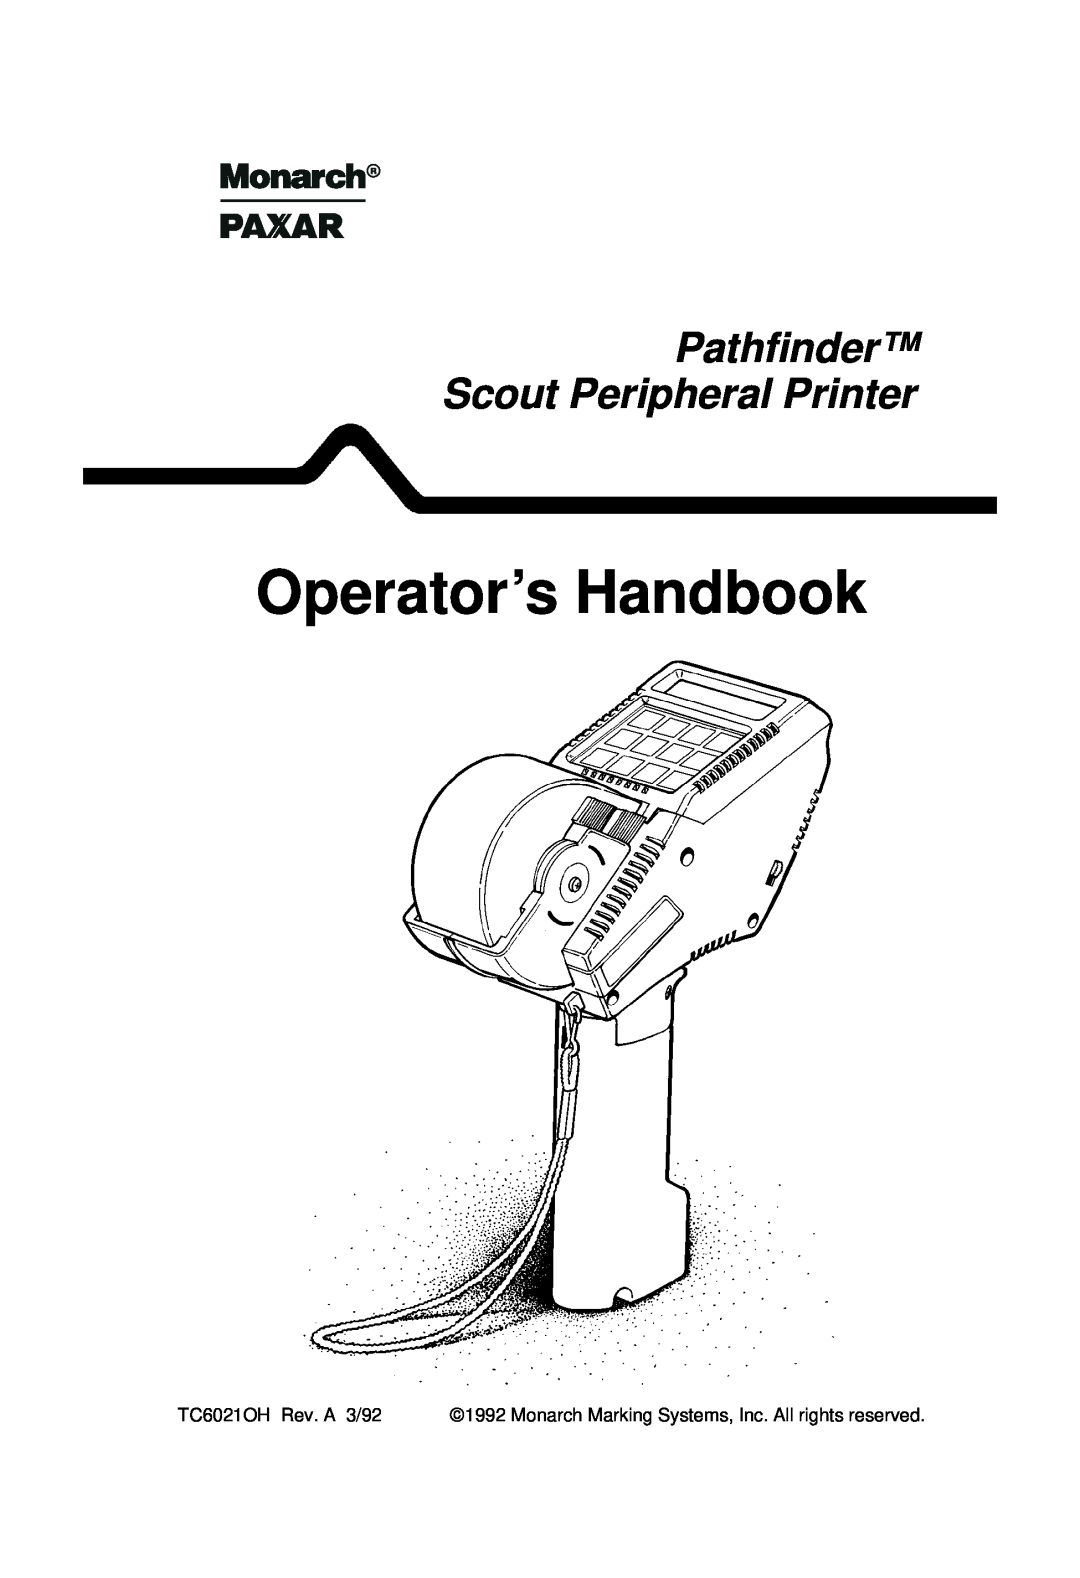 Paxar TC6021OH manual Operators Handbook, Pathfinder Scout Peripheral Printer 